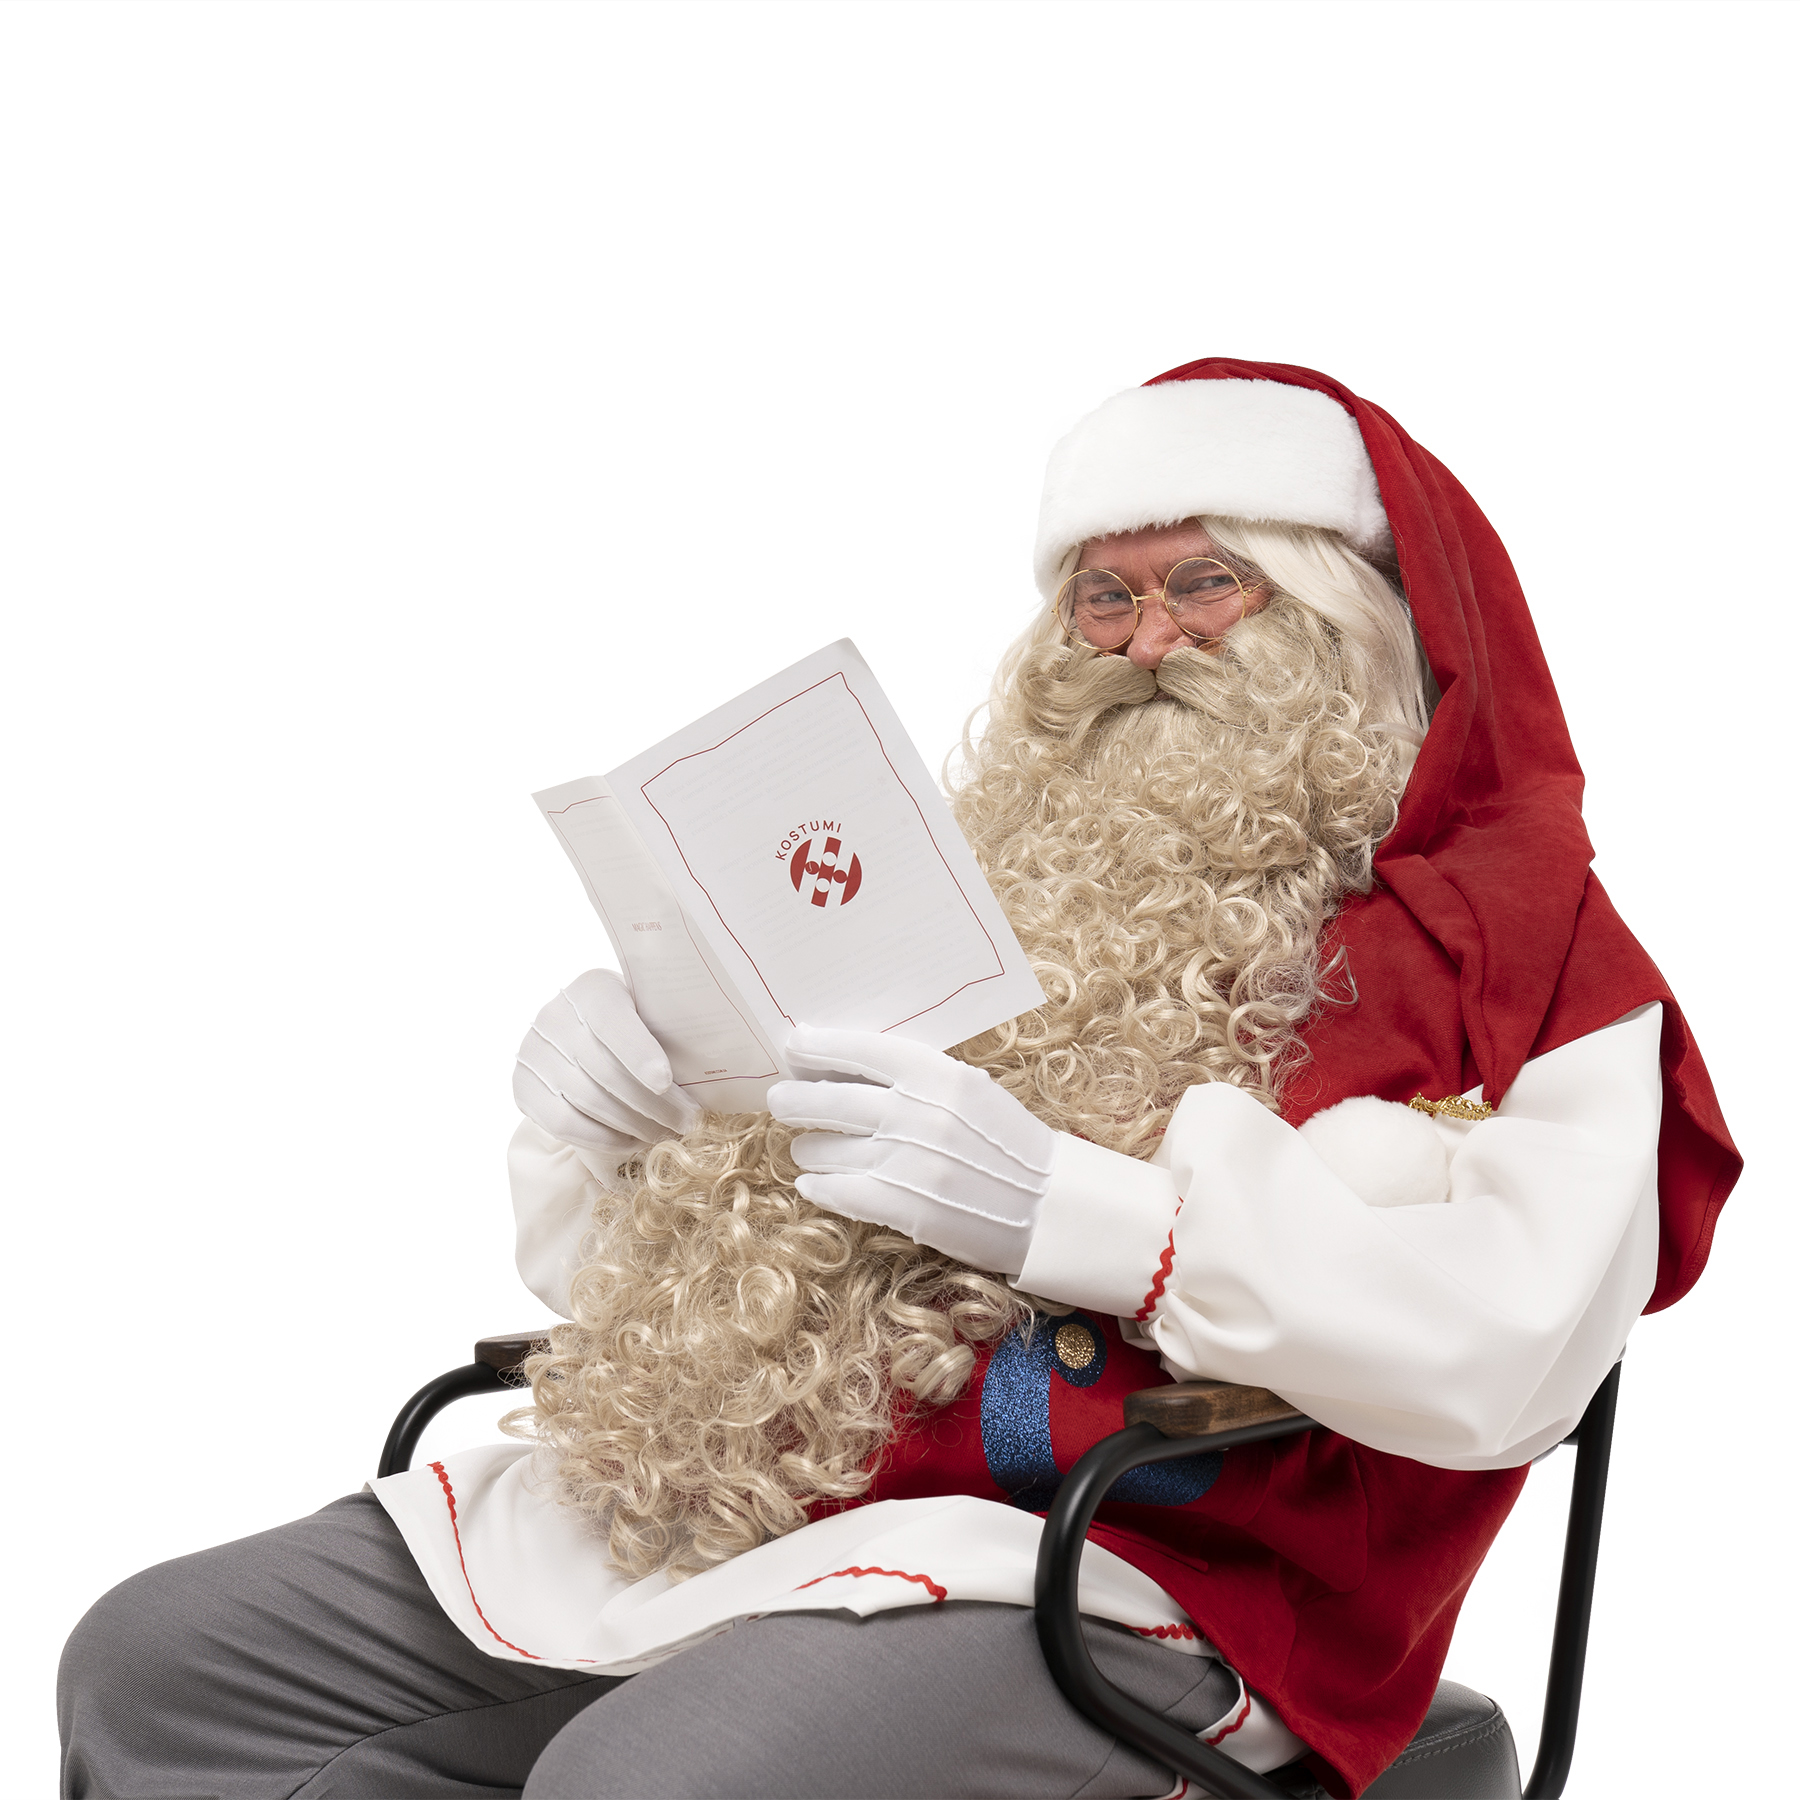 Scandinavian Santa Claus costume